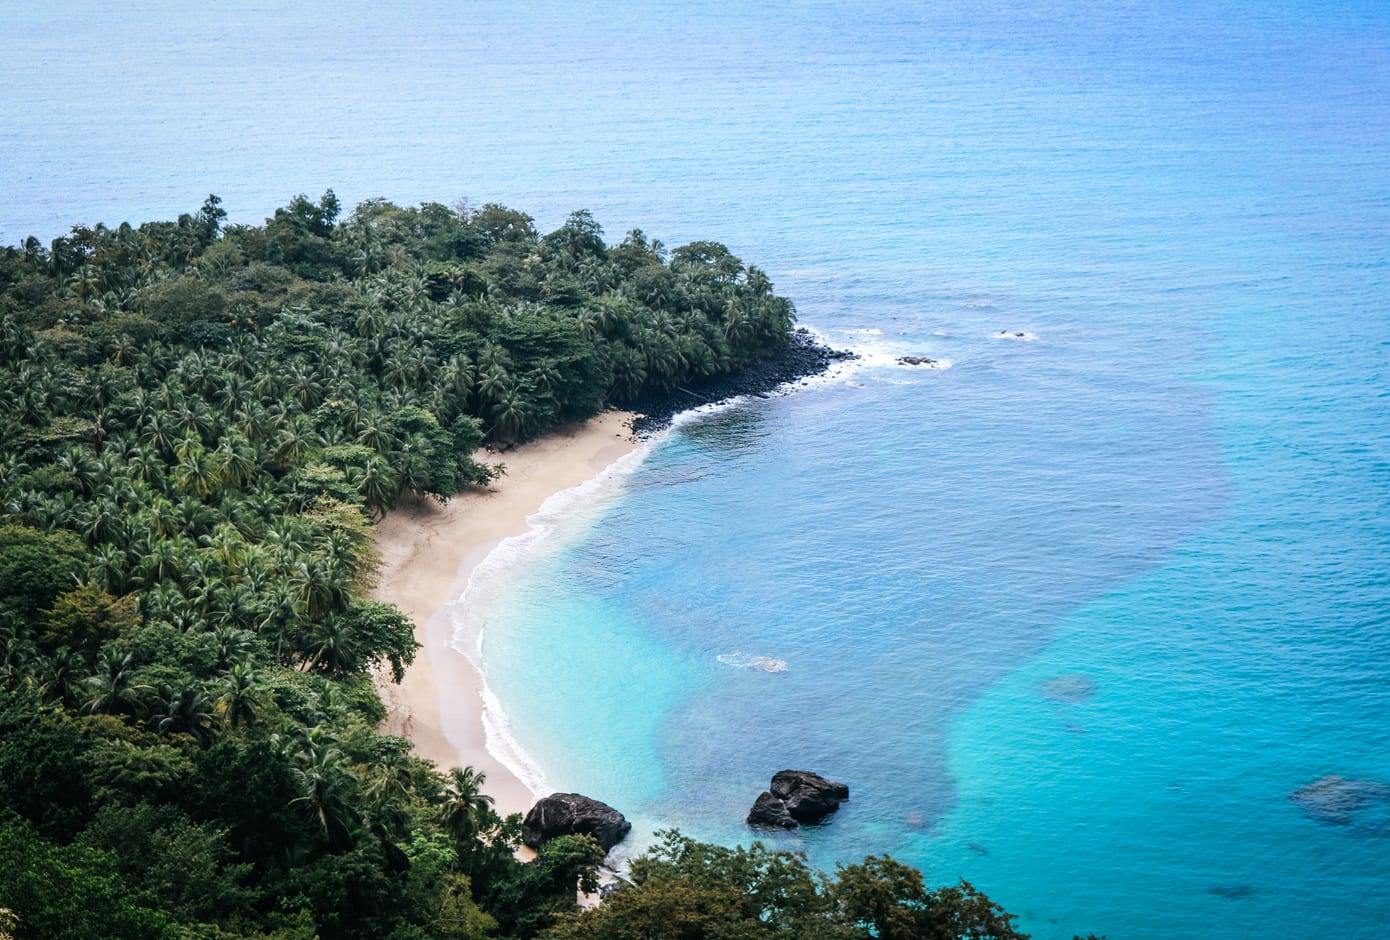 The famous banana beach on the beautiful island of Principe, São Tomé and Príncipe, Africa.
